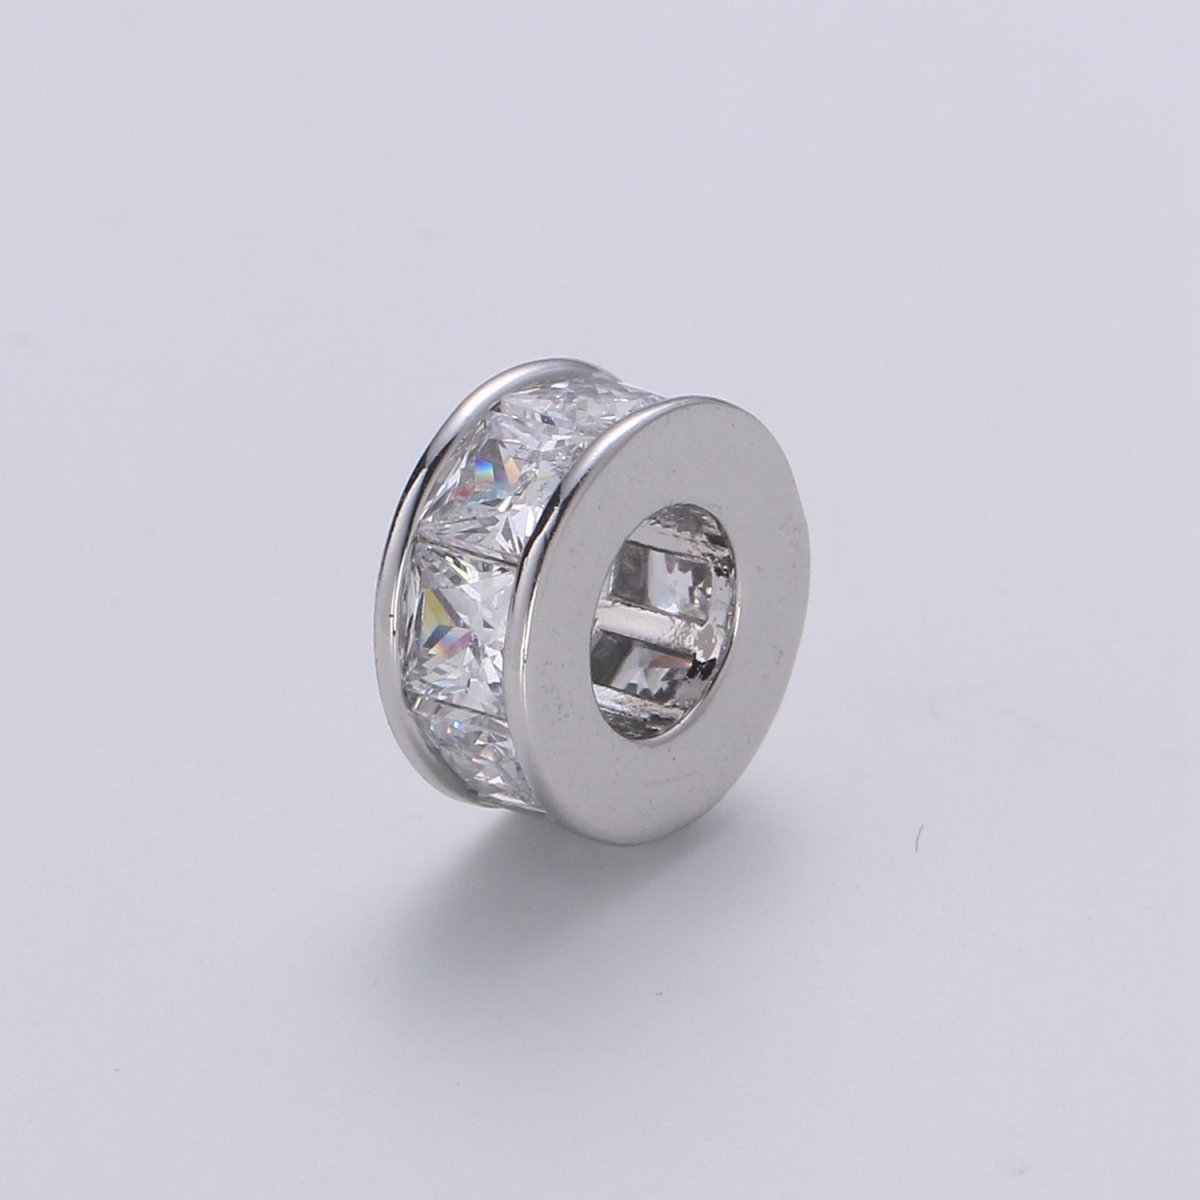 Tiny Silver Round Circle Ring Beads CZ Crystal Mini Geometric Round Shape Jewelry Making Beads B364 - DLUXCA